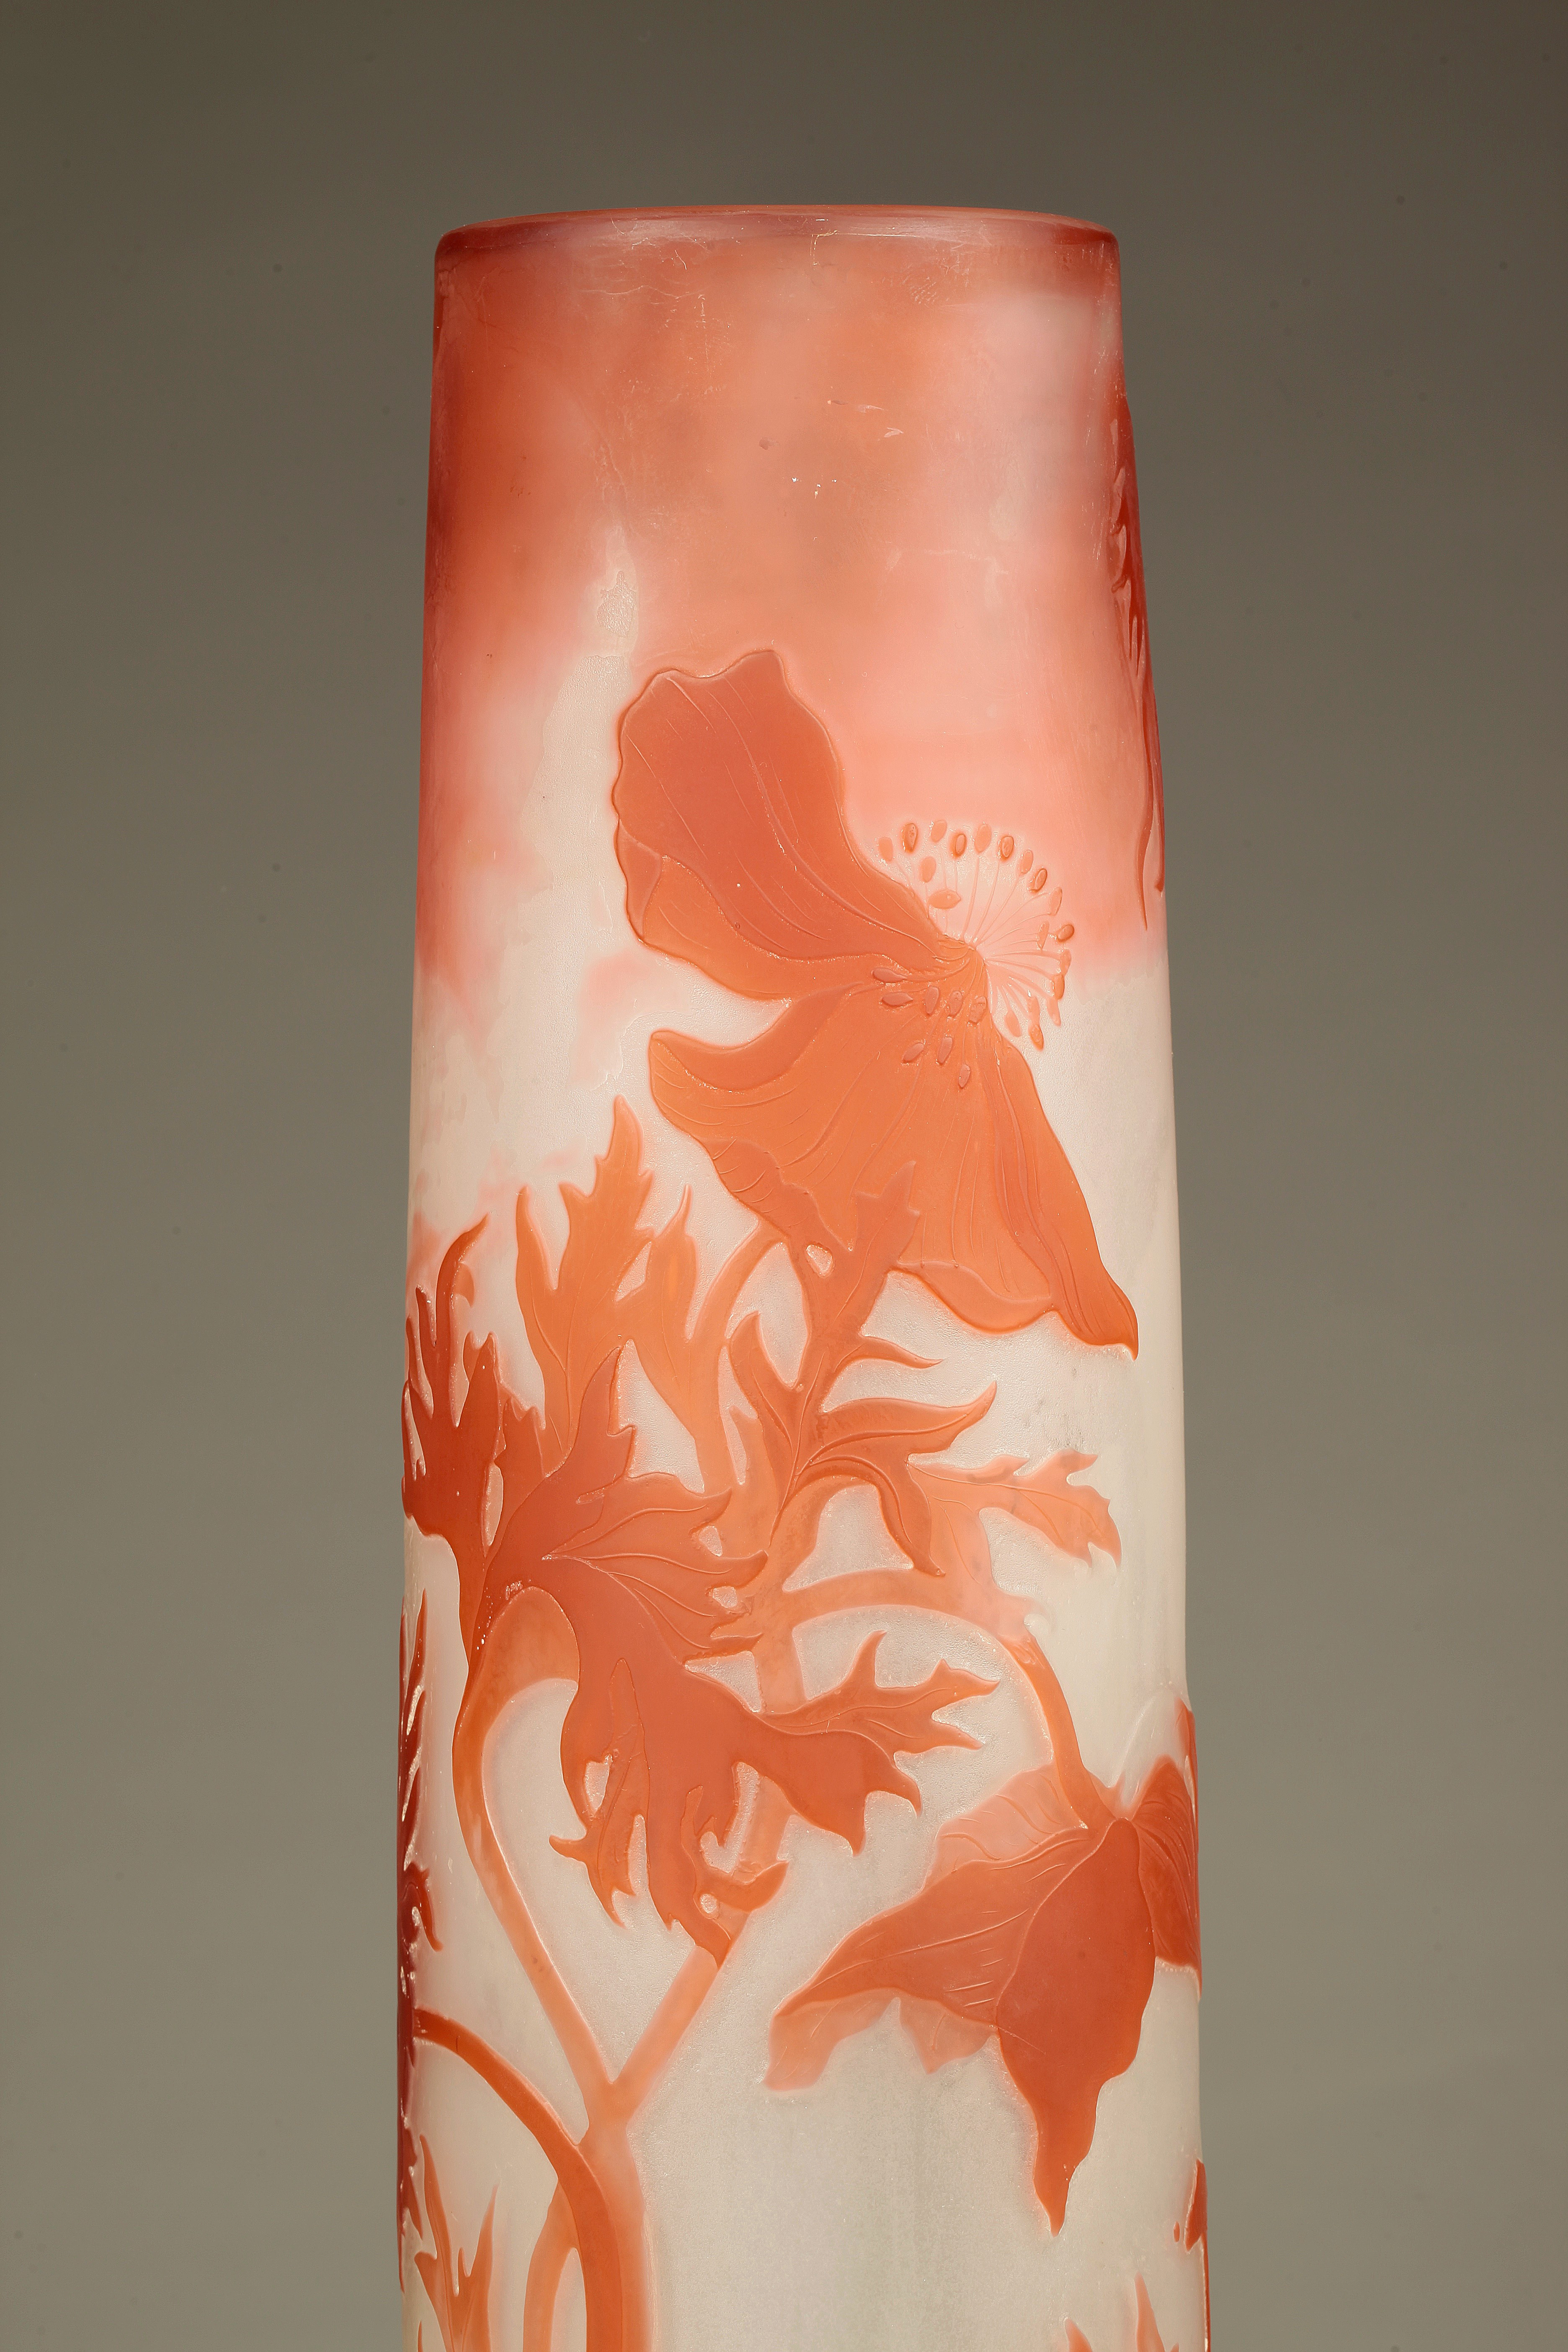 emile galle vase of emile galle dua¼y wazon 44 cm okoao 1900 roku with najedao aby powiakszya